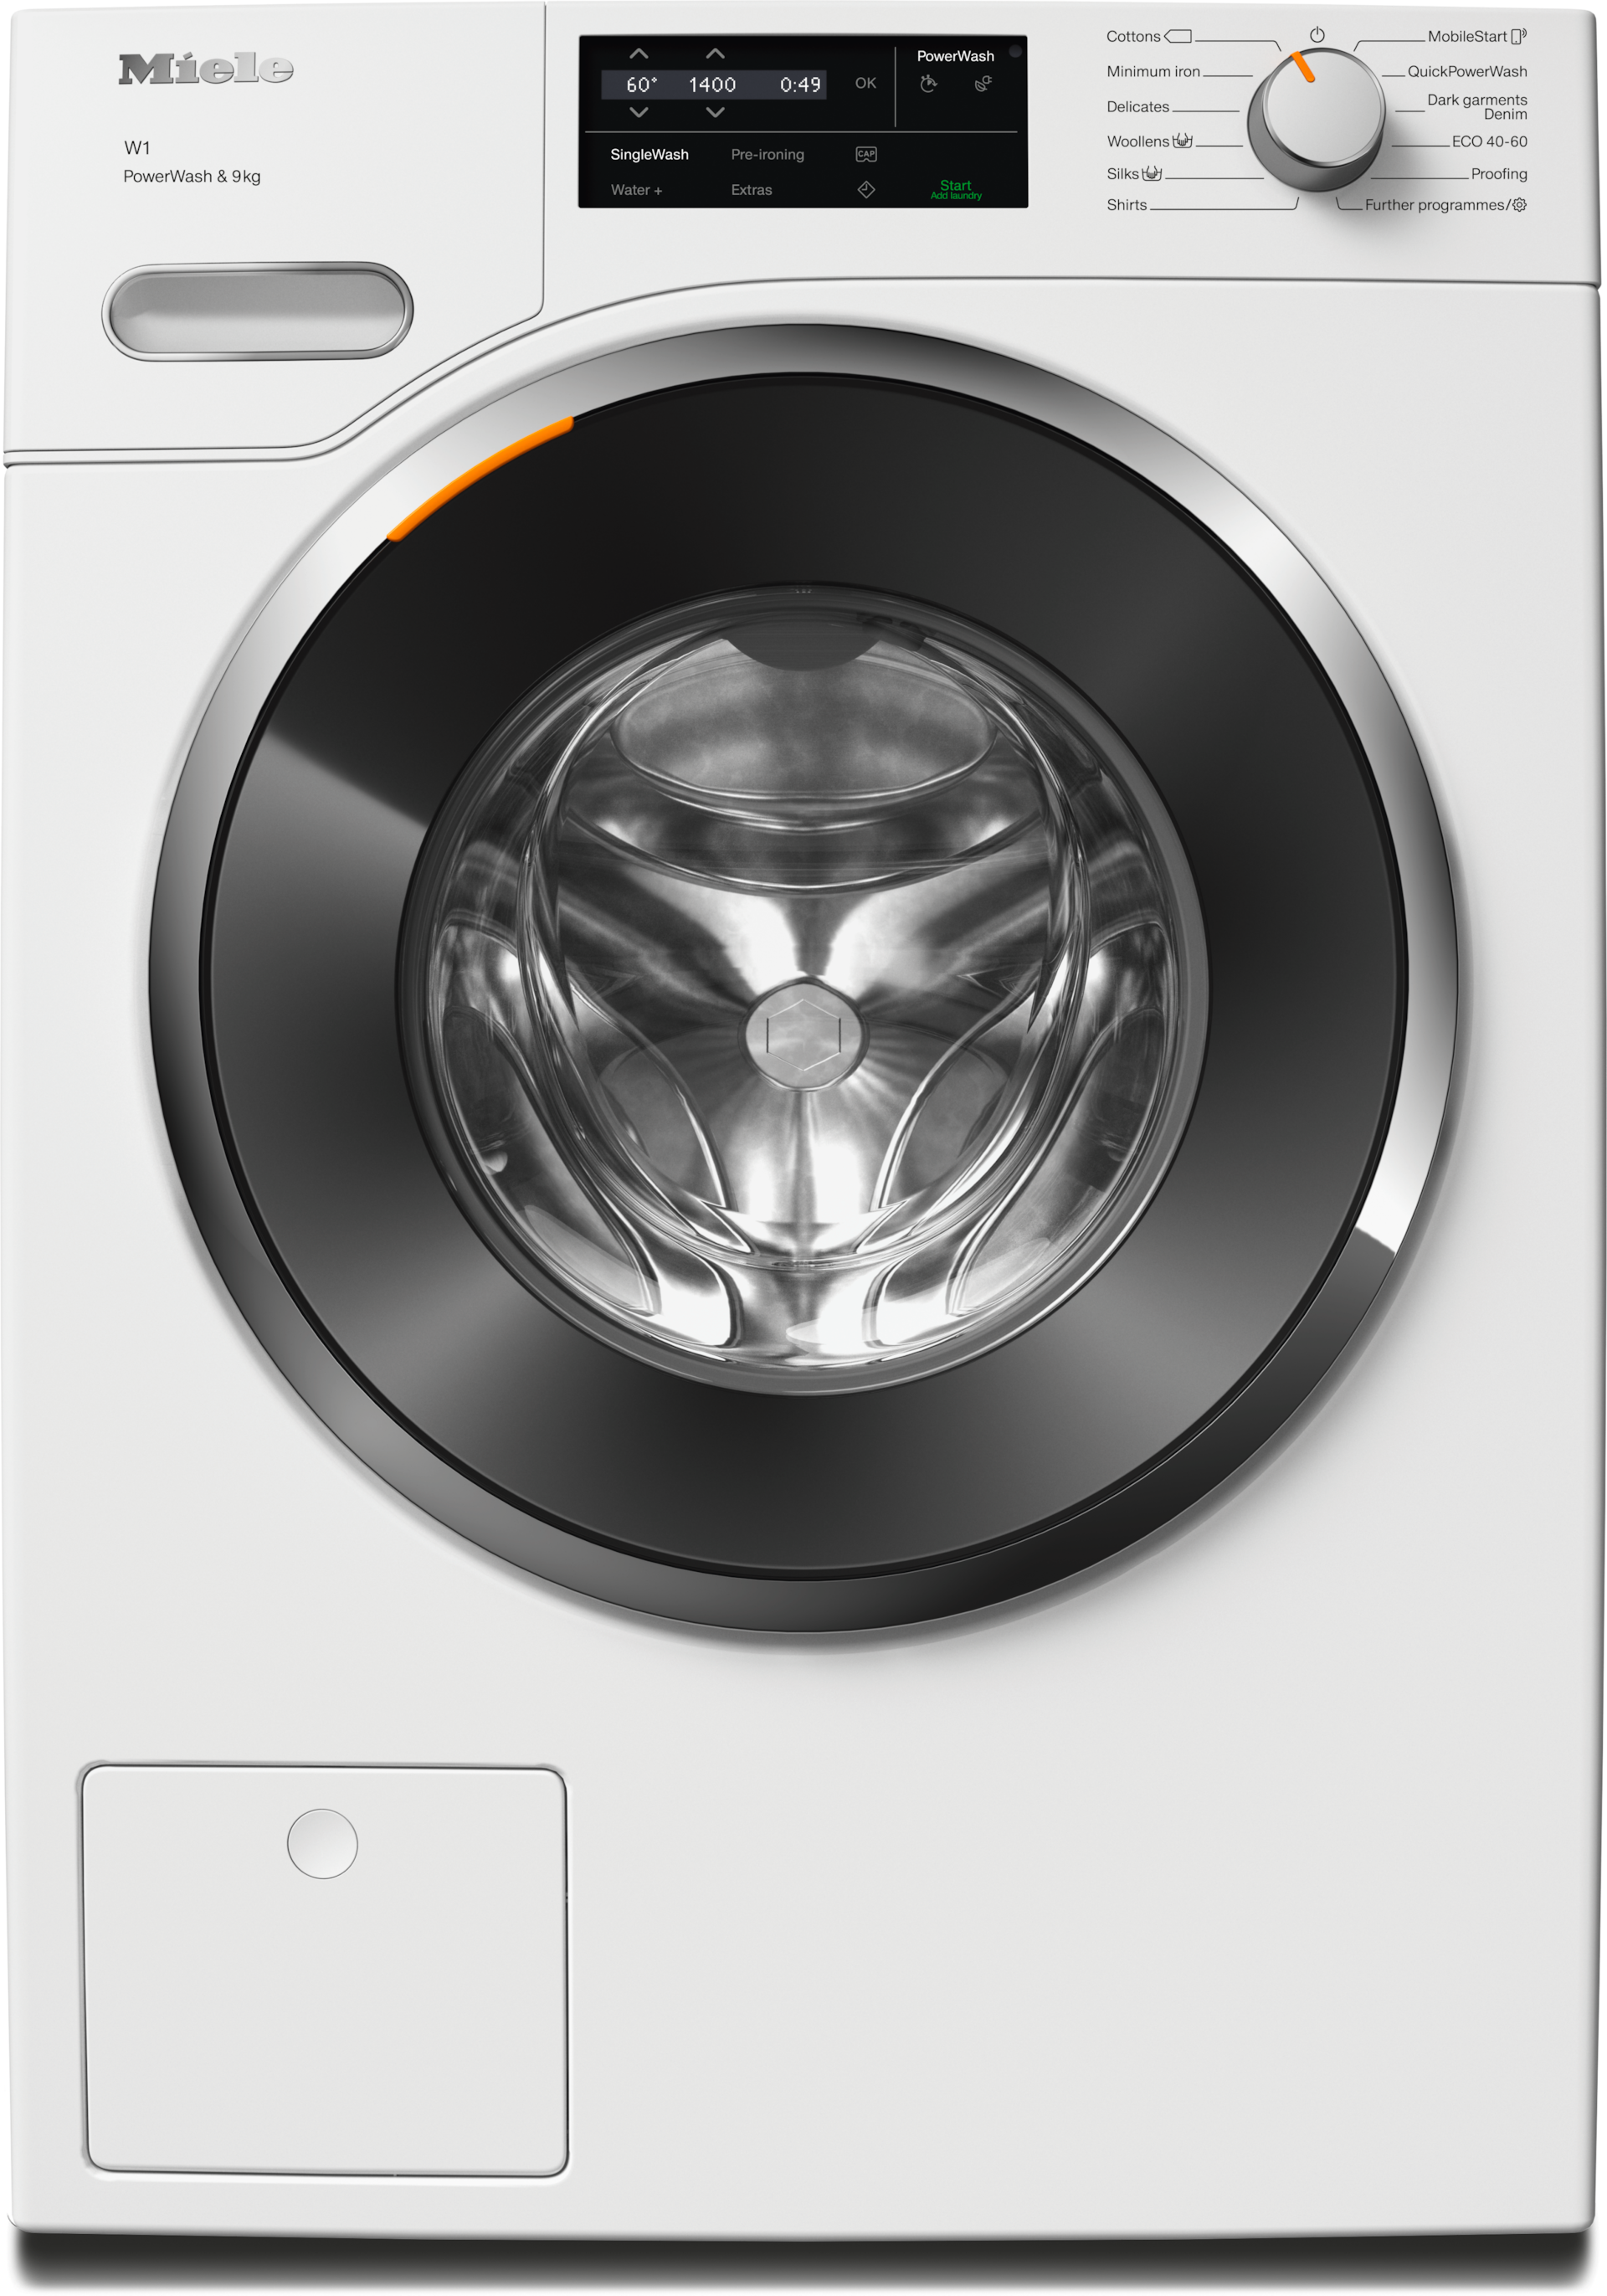 Mașini de spălat - WWG360 WCS PWash&9kg - 1